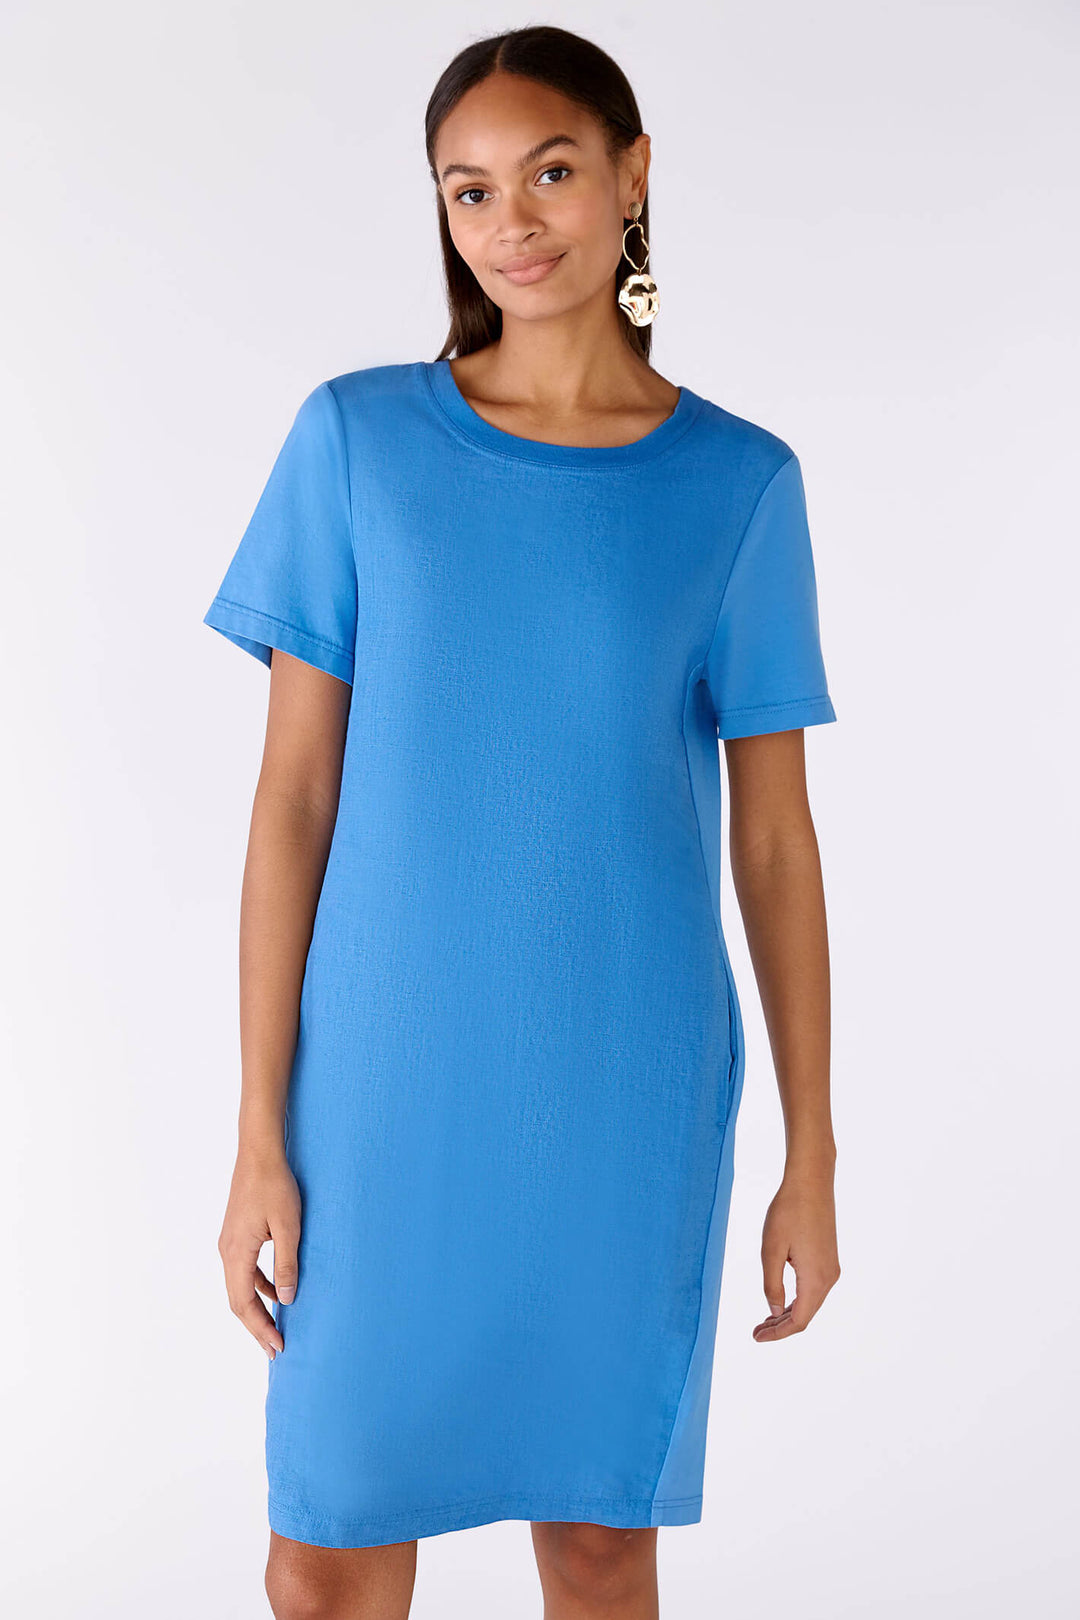 Oui 78504 Blue Linen & Cotton Short Sleeve Dress - Shirley Allum Boutique